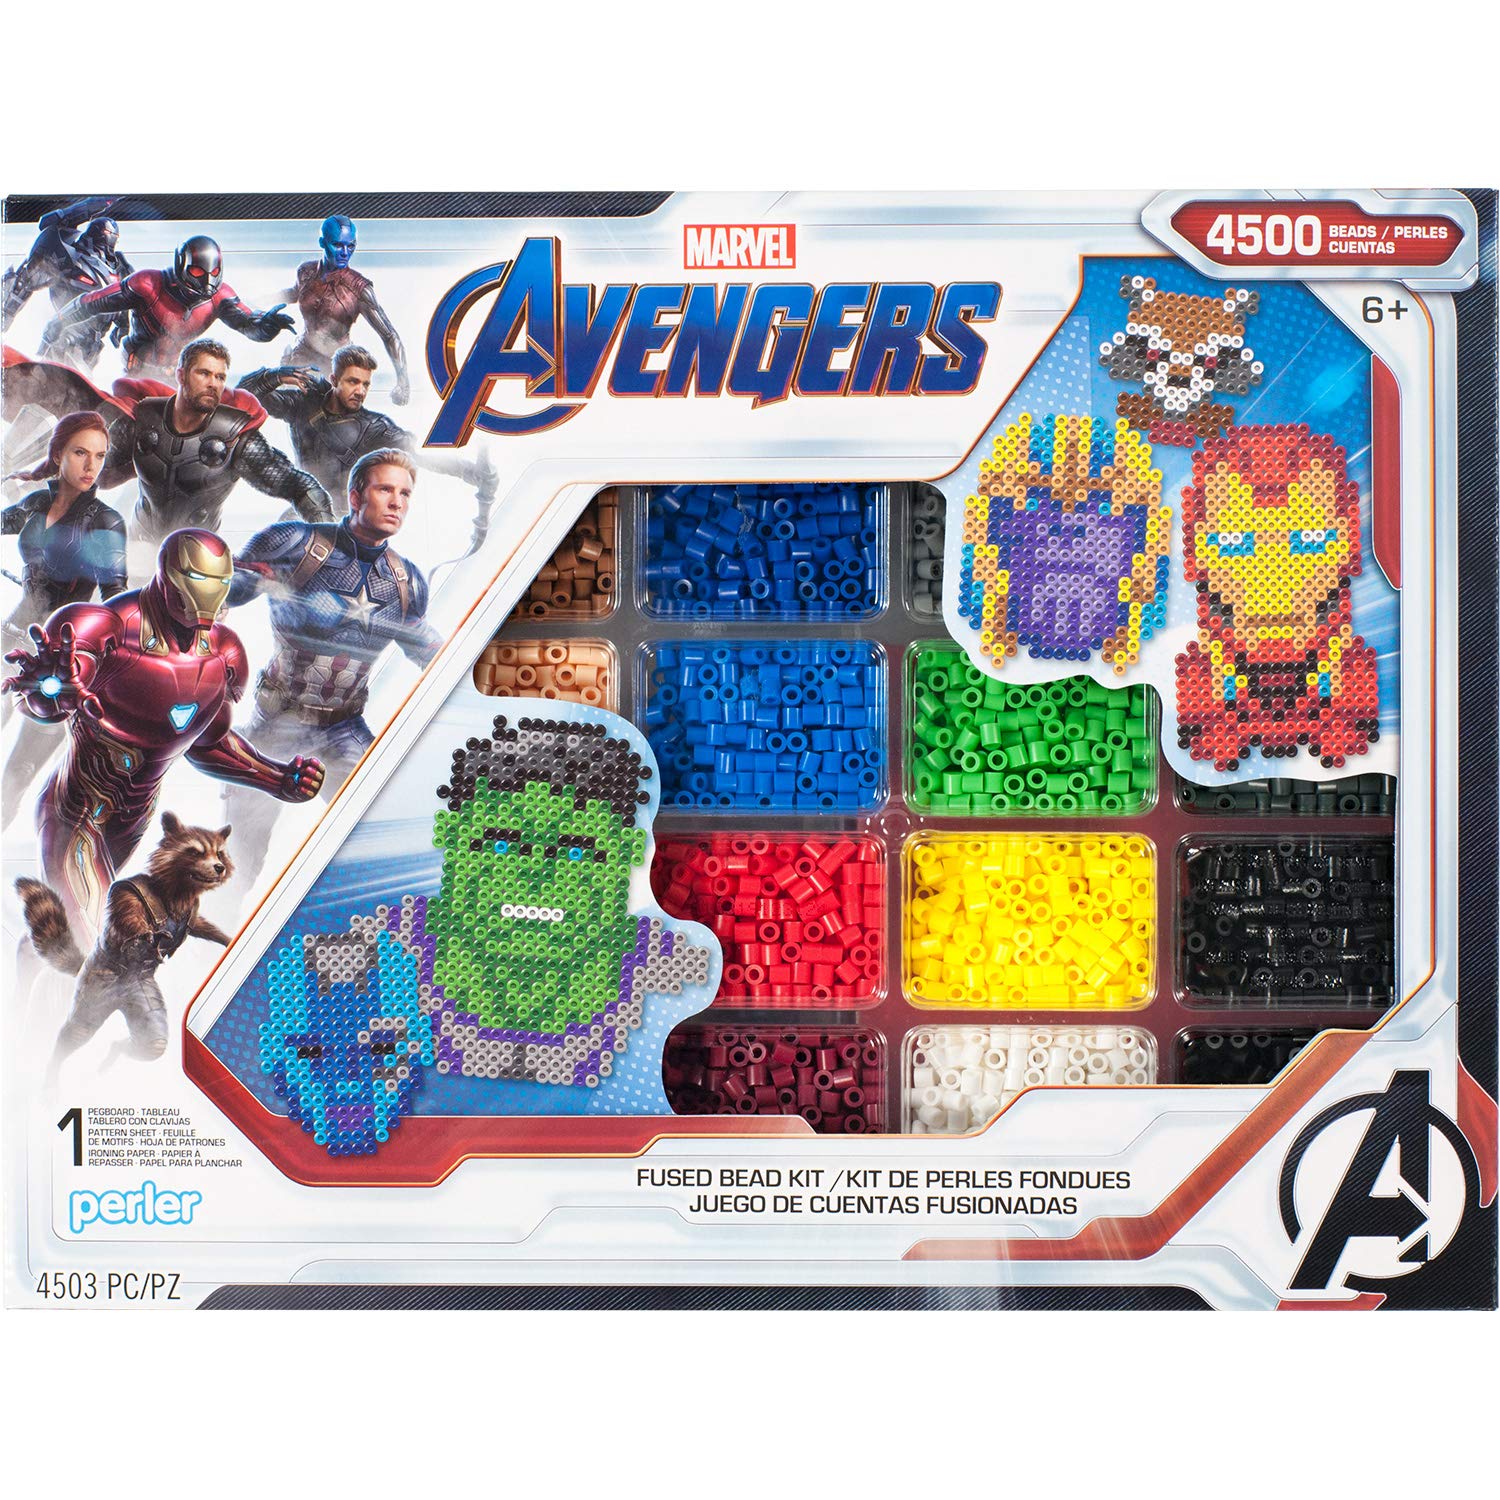 Perler PER8054346 Marvel Avengers Fuse Bead Kit, 4503pc, 10 Patterns, Multicolor